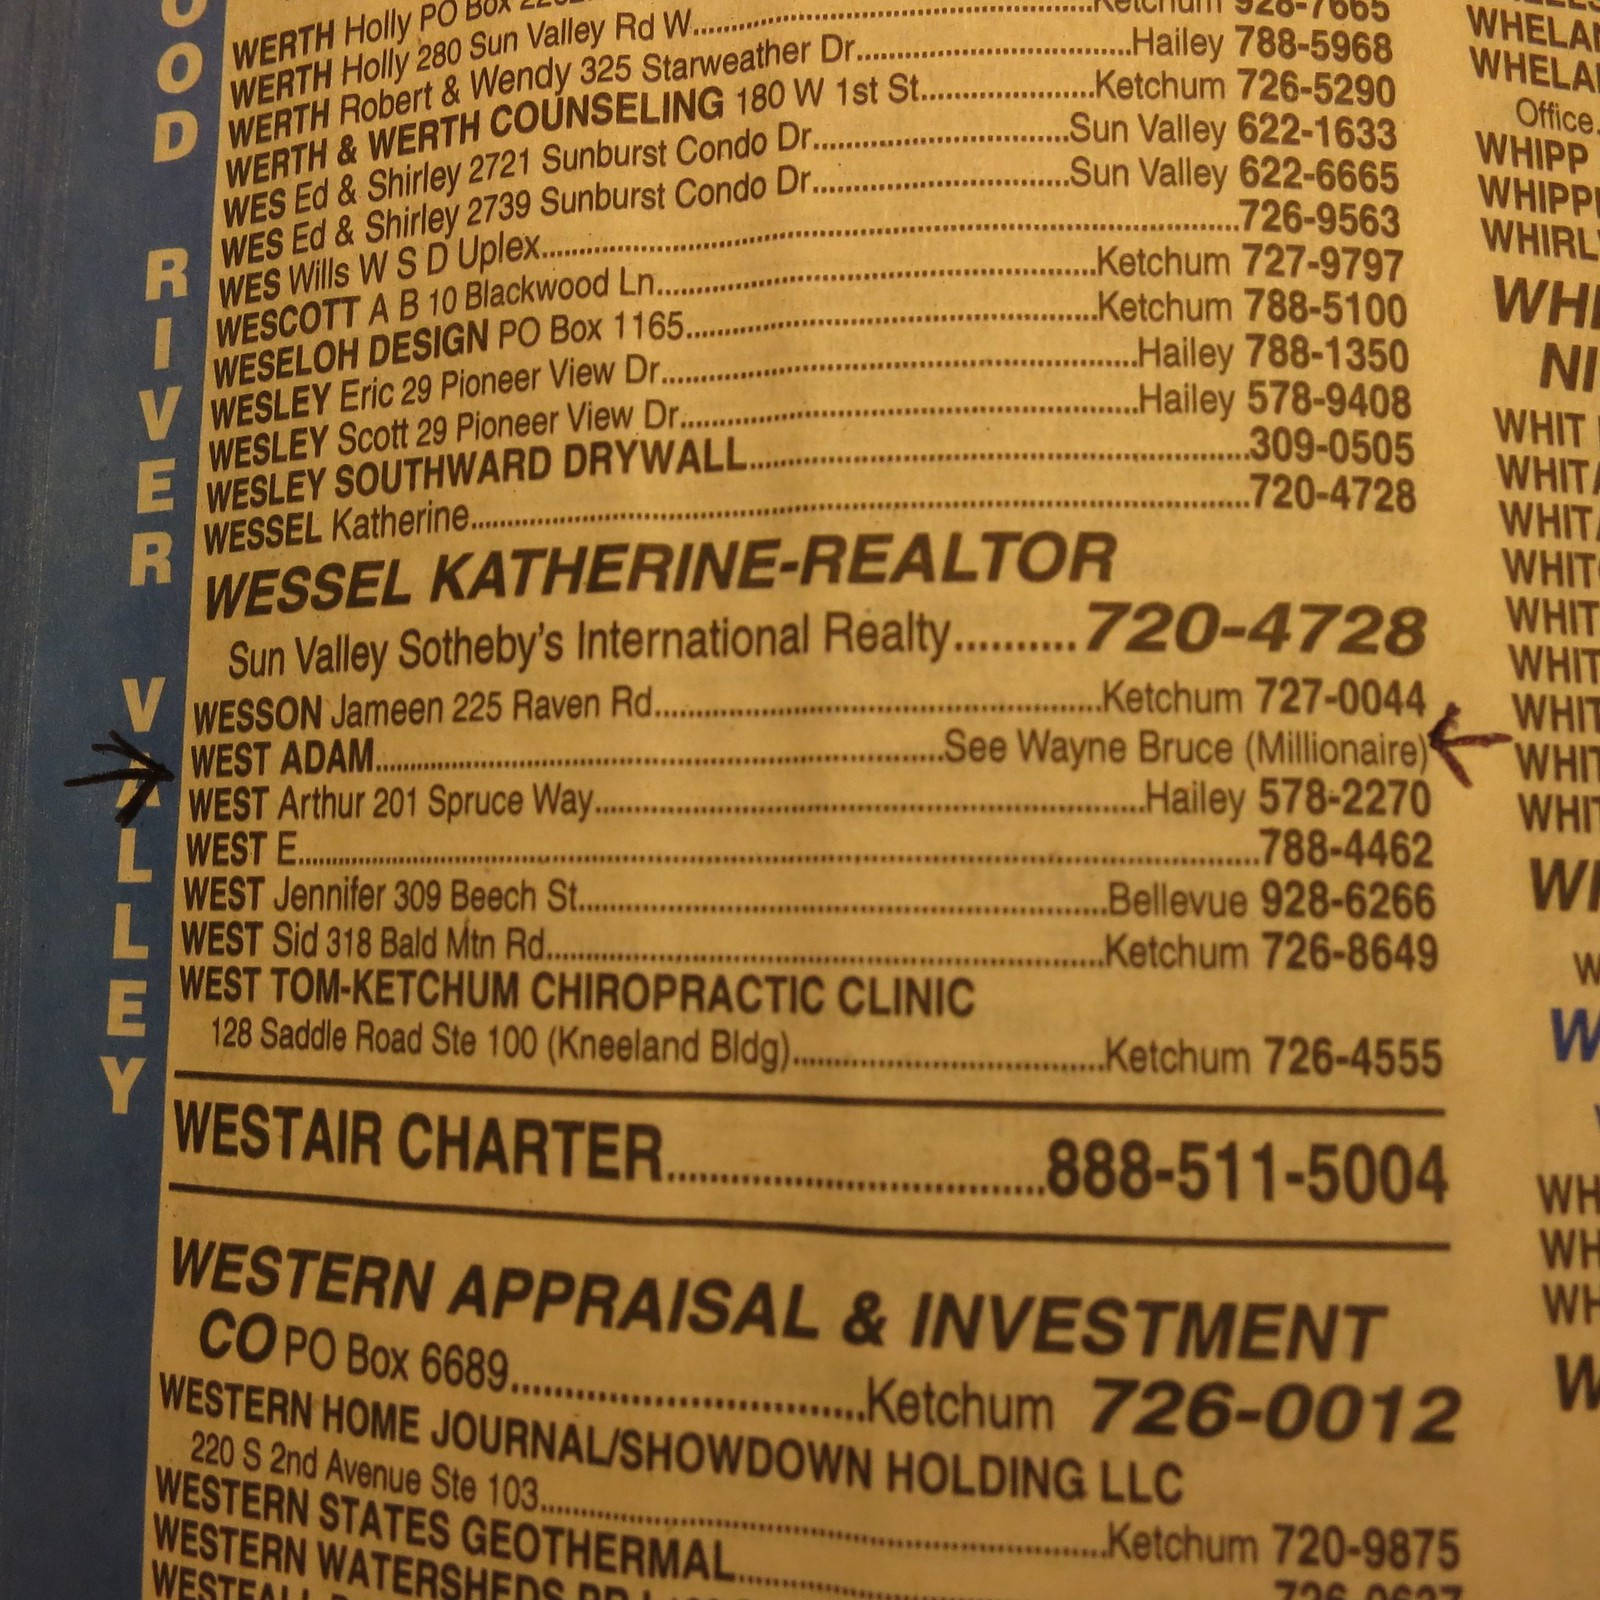 TV's 'Batman' Adam West plays a practical joke in his local phone book